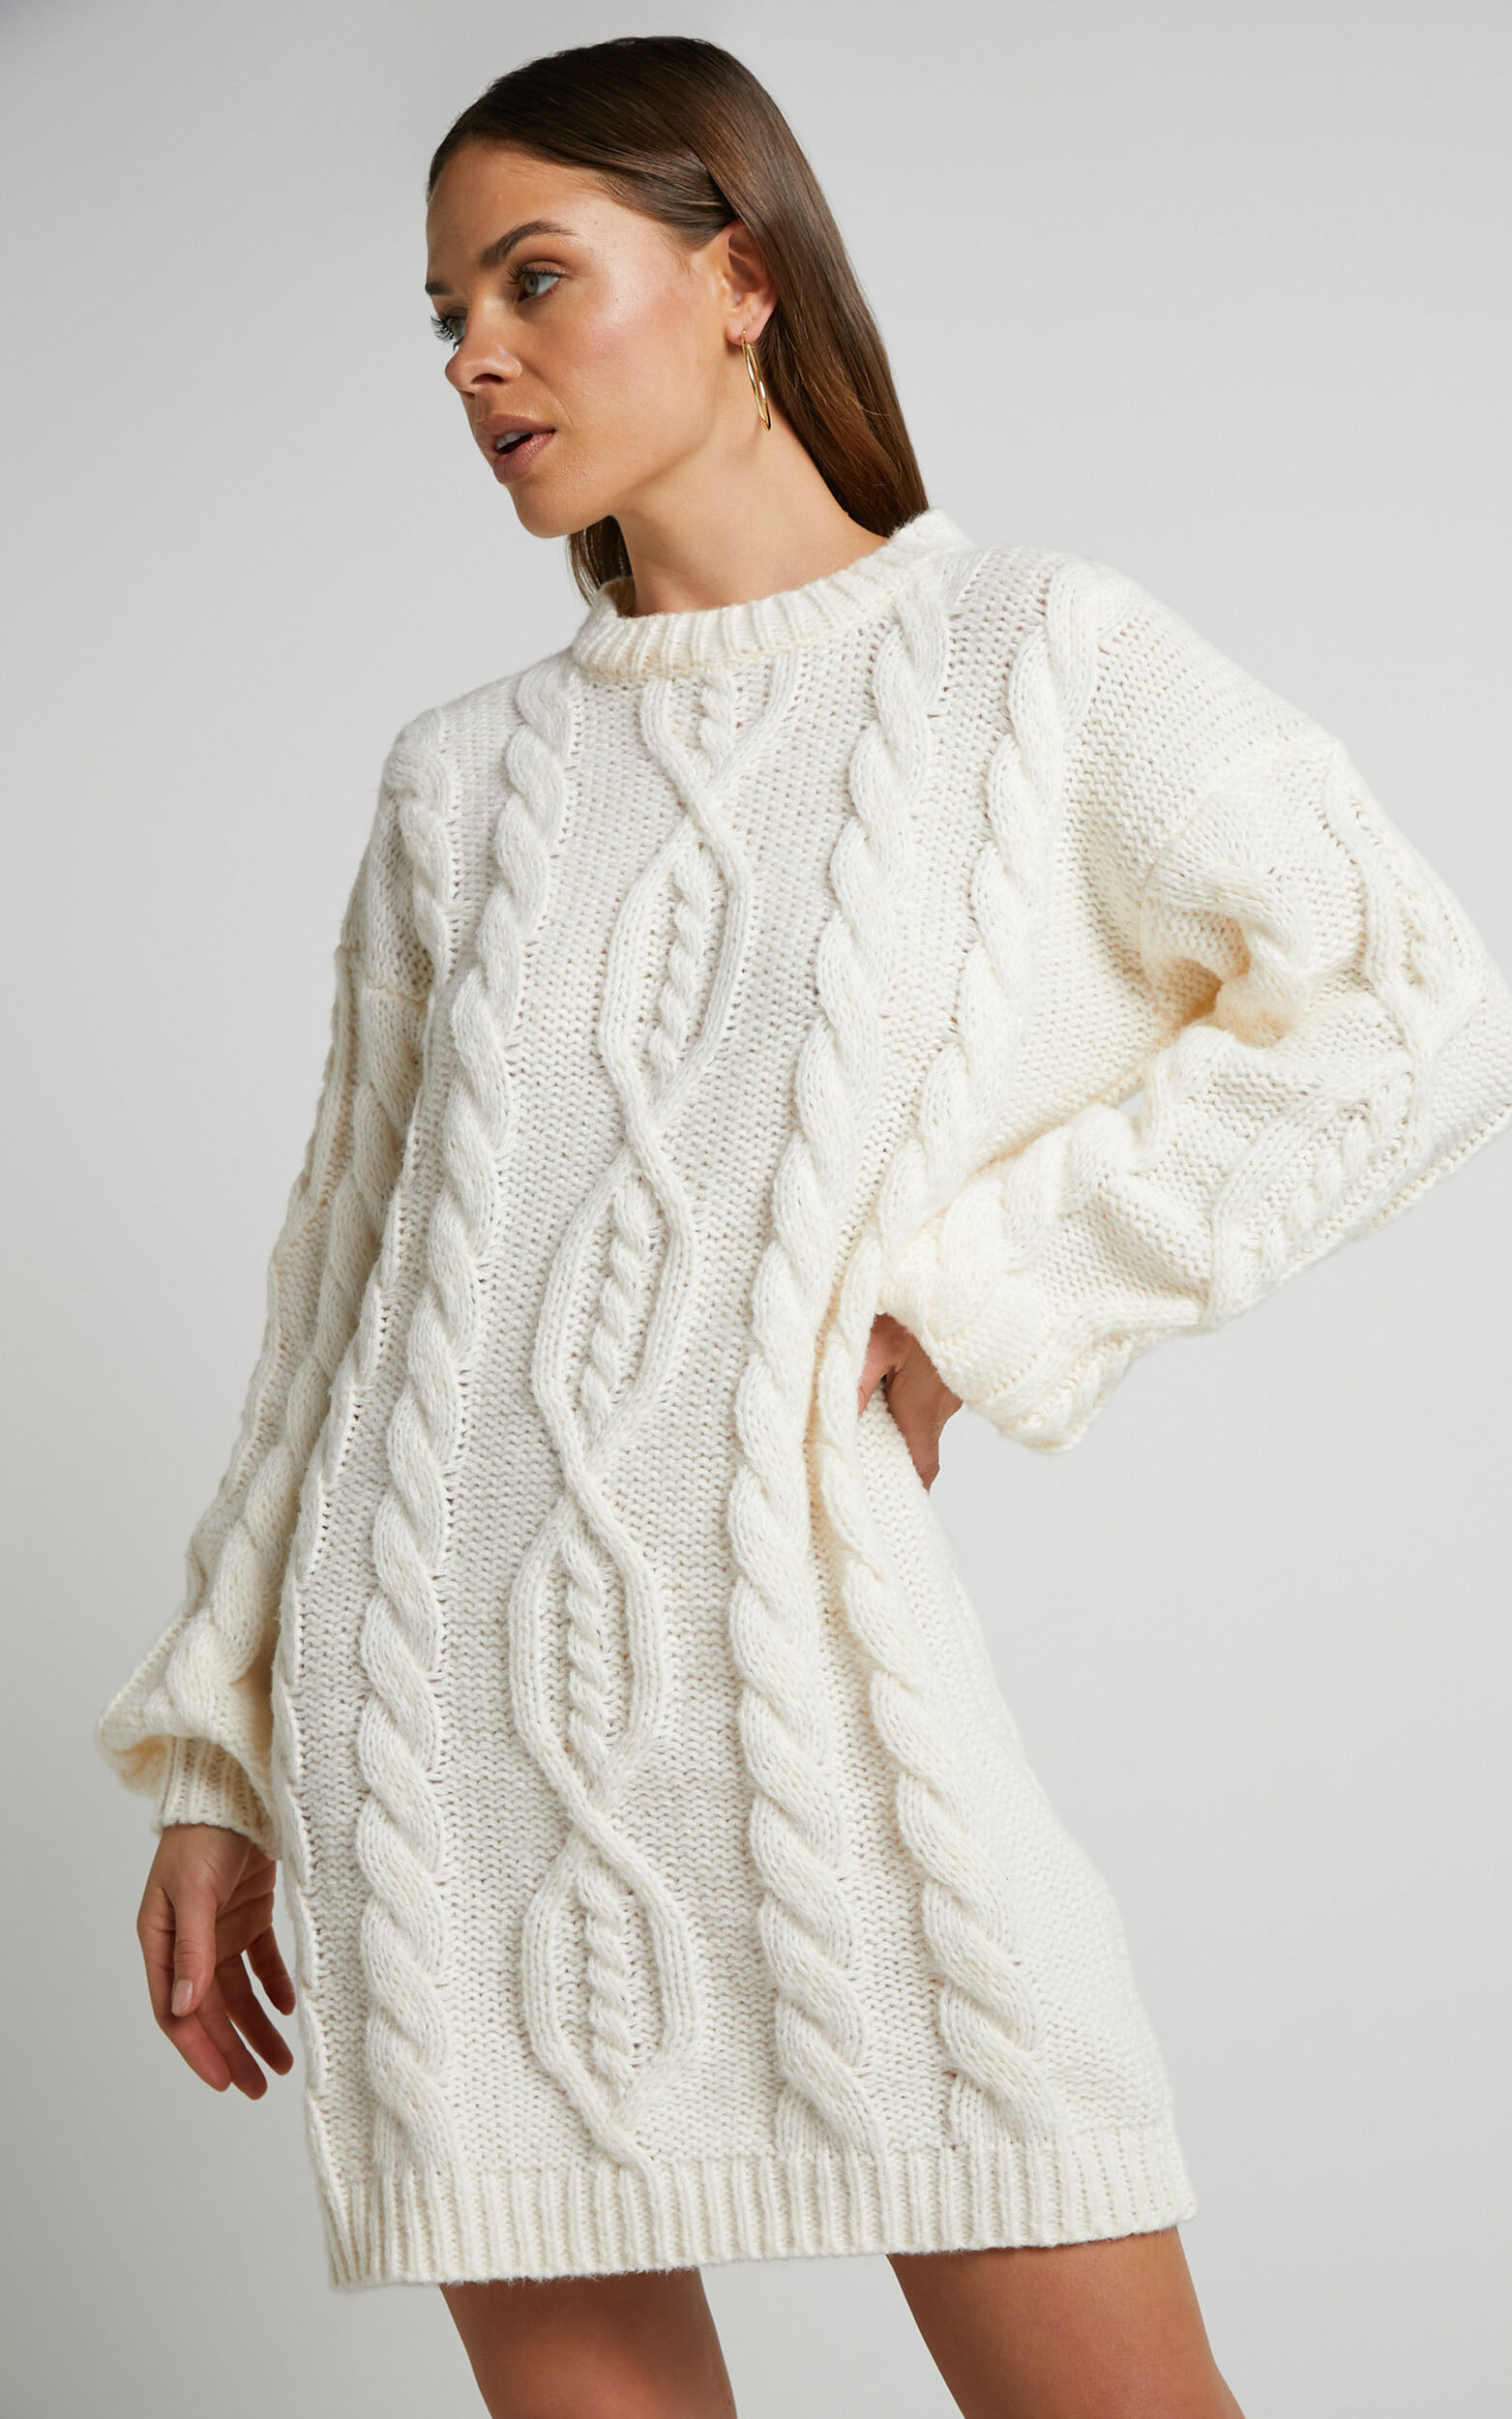 Deliah Mini Dress - Cable Knit Sweater Dress in Cream - 06, CRE1